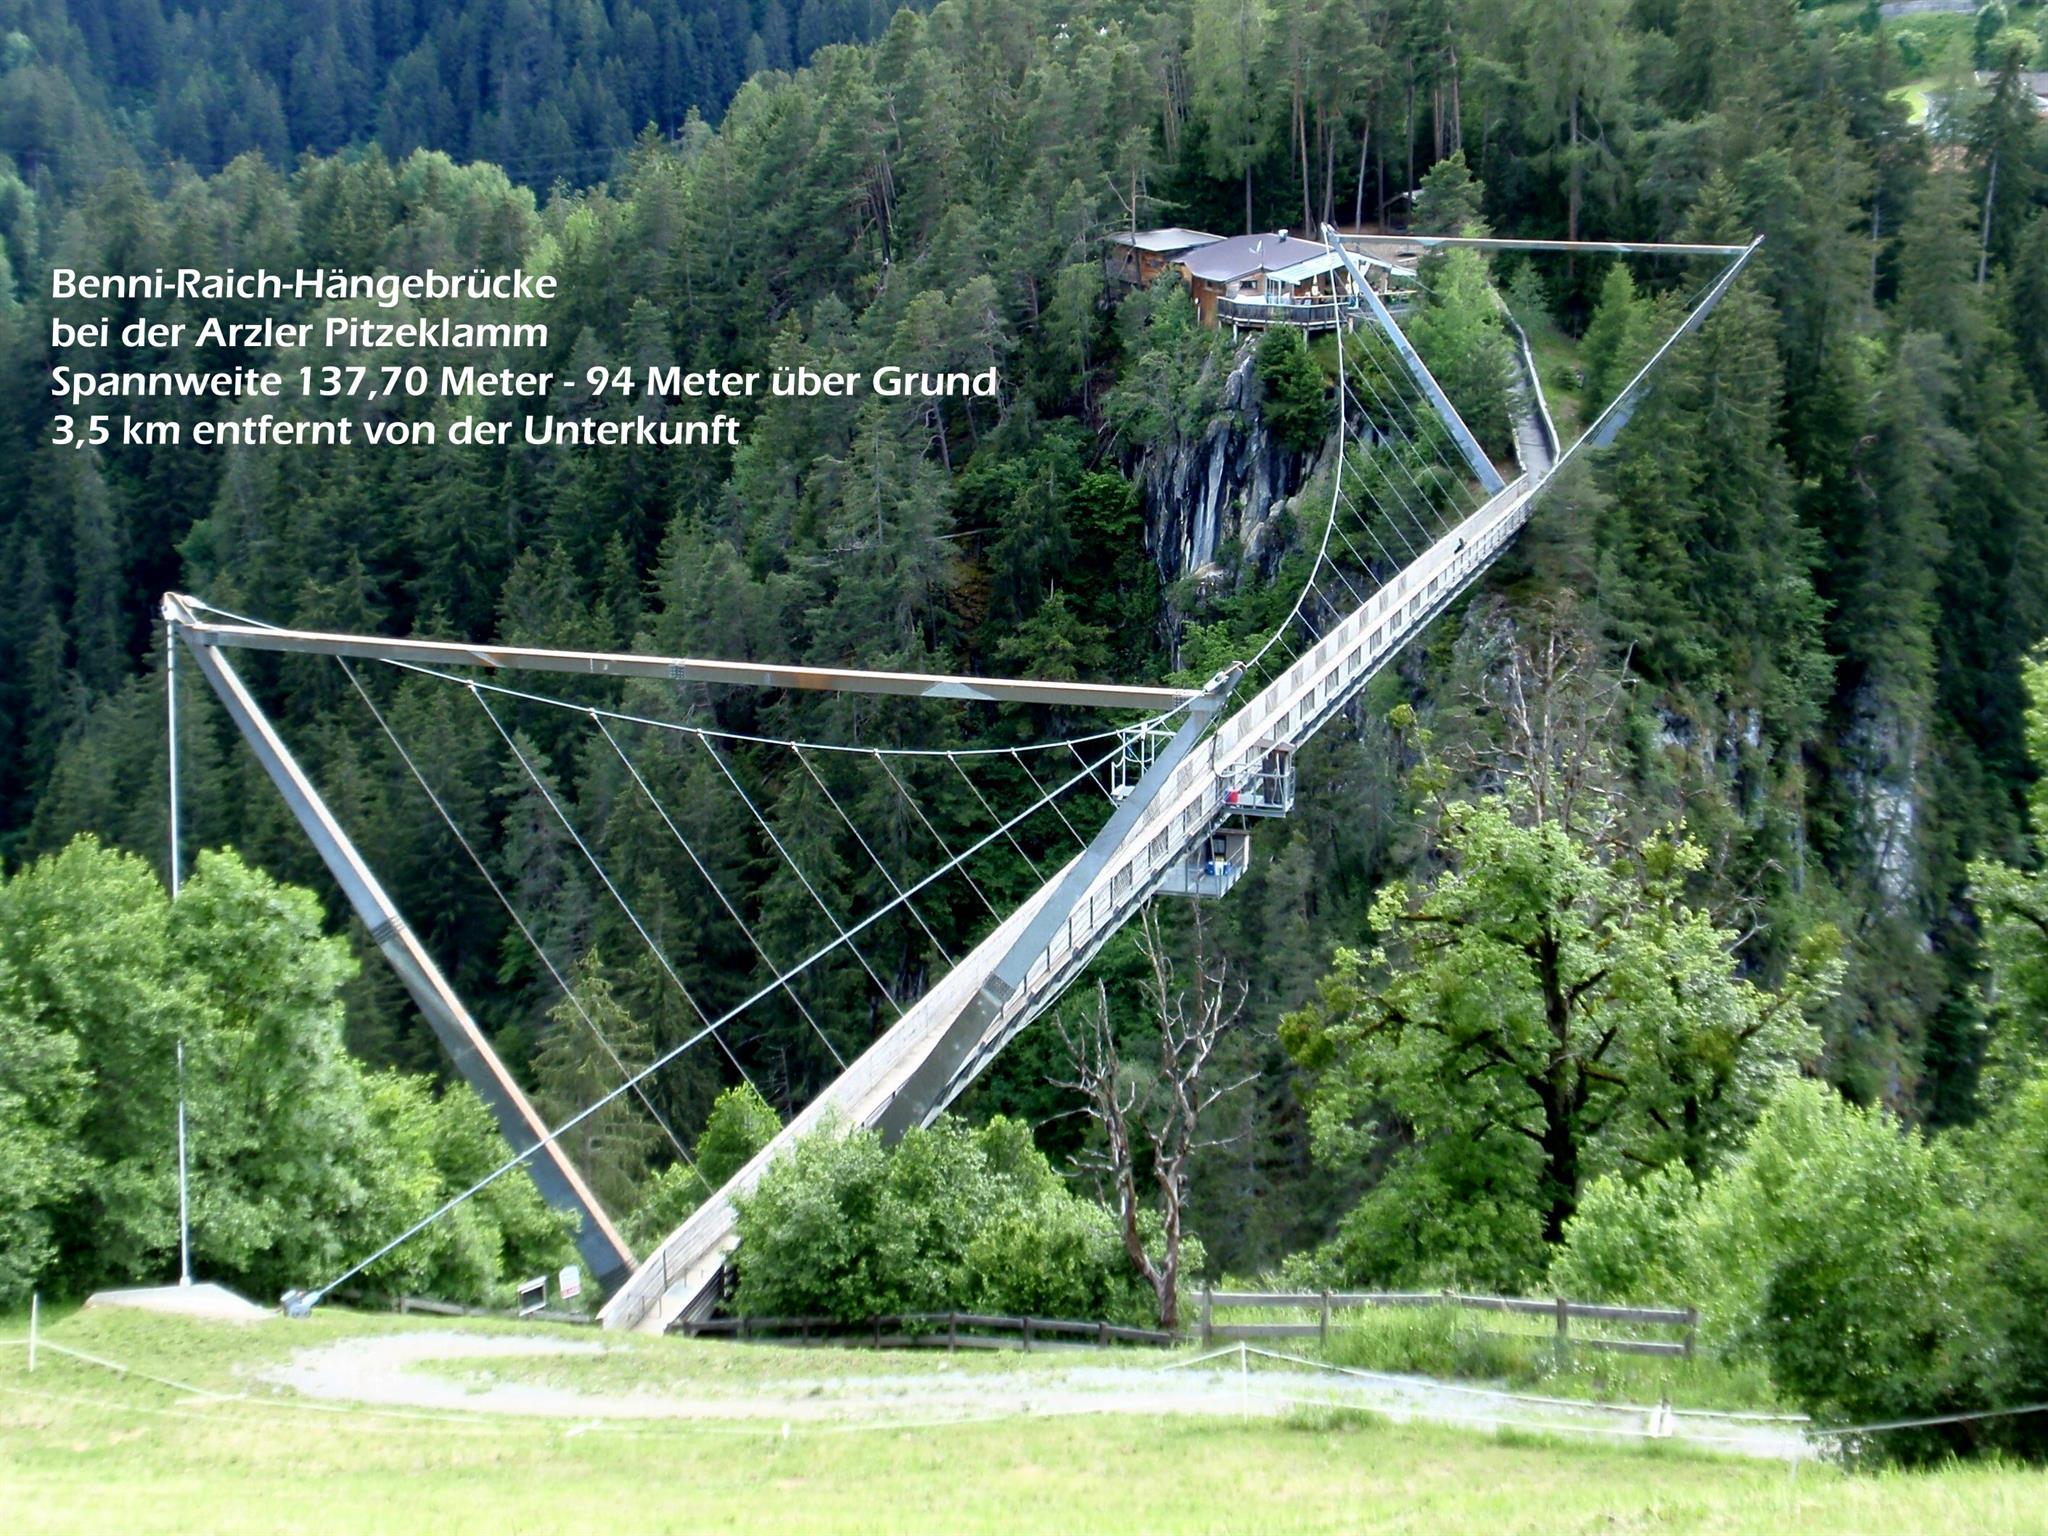 Benni Raich Hängebrücke in Arzl